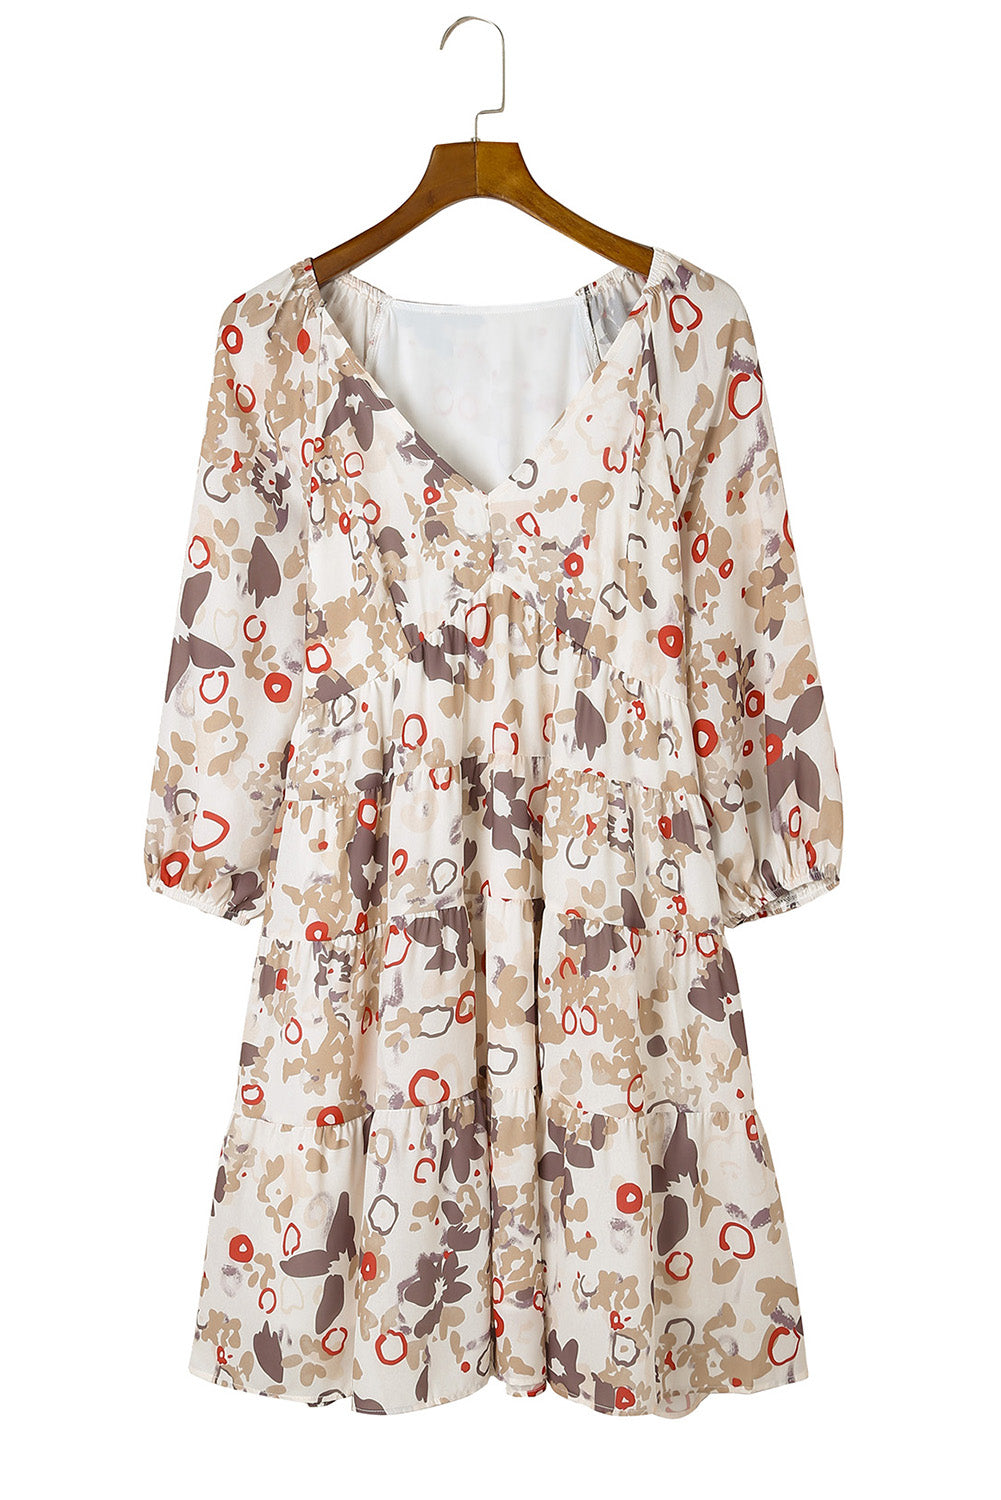 Apricot 3/4 Sleeves V Neck Print Tiered Flowy Short Dress Mini Dresses JT's Designer Fashion